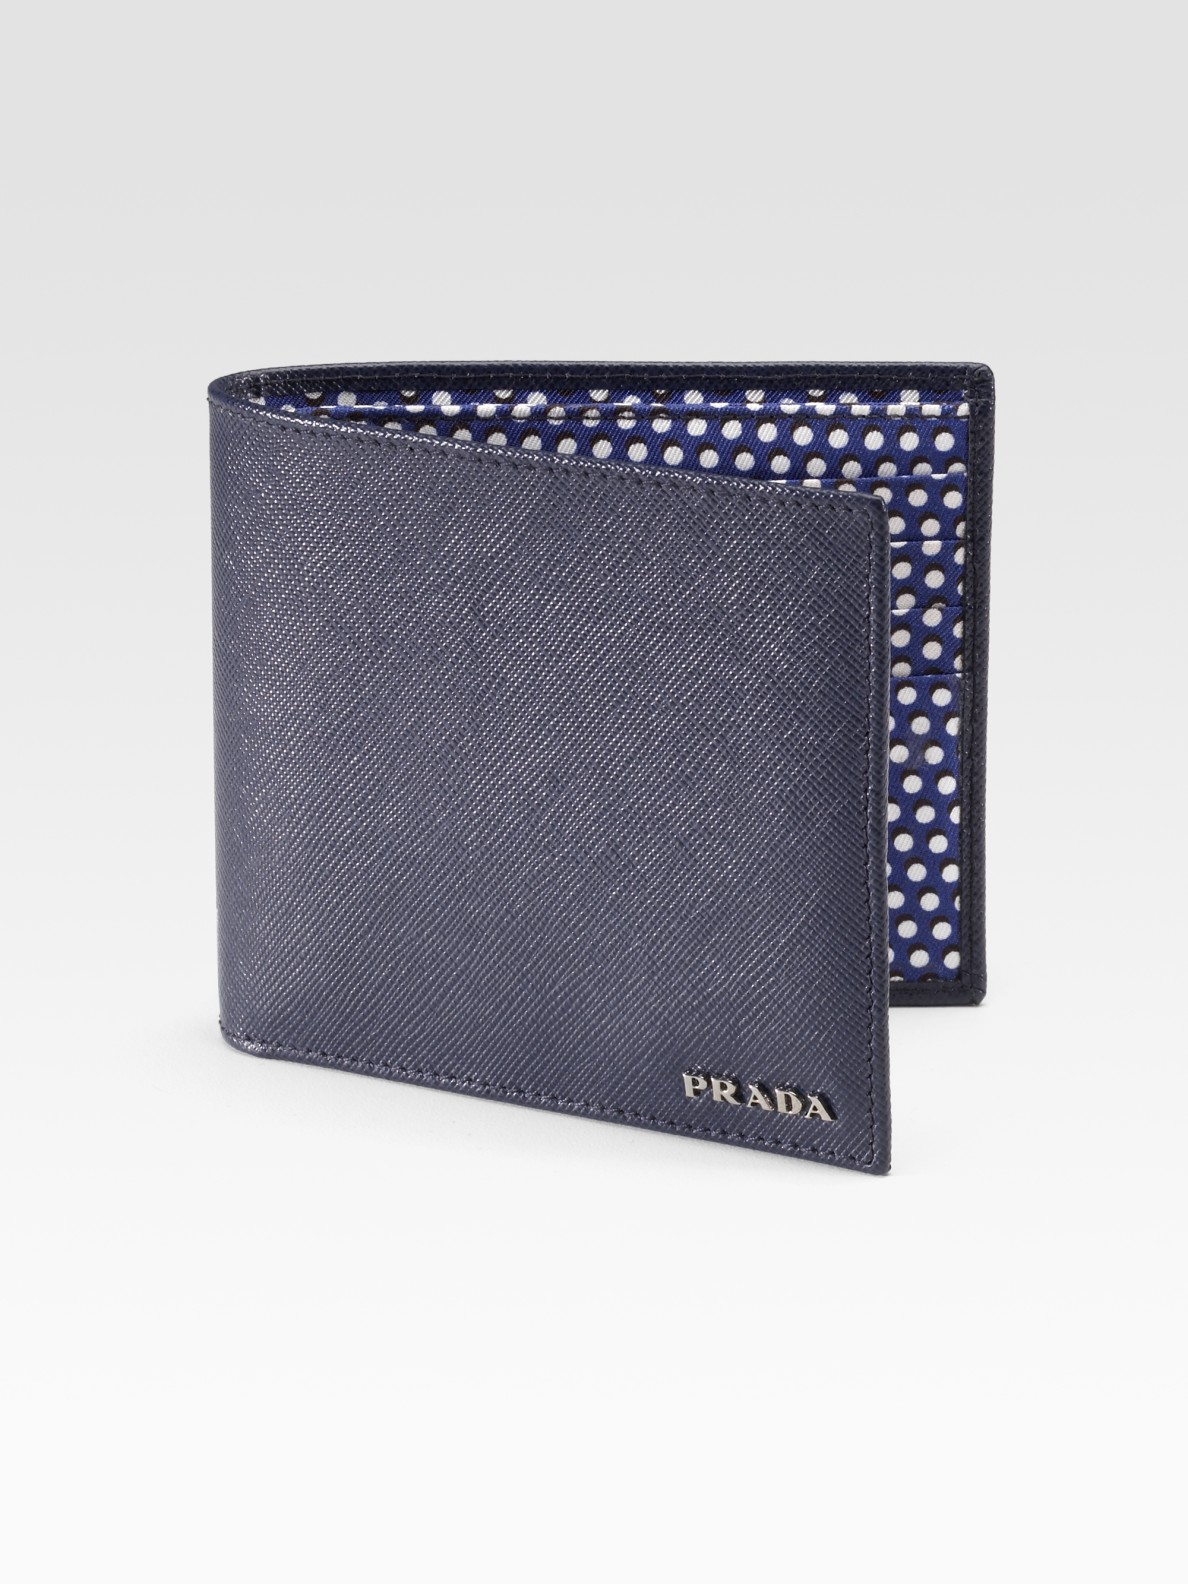 Lyst - Prada Leather Wallet in Blue for Men